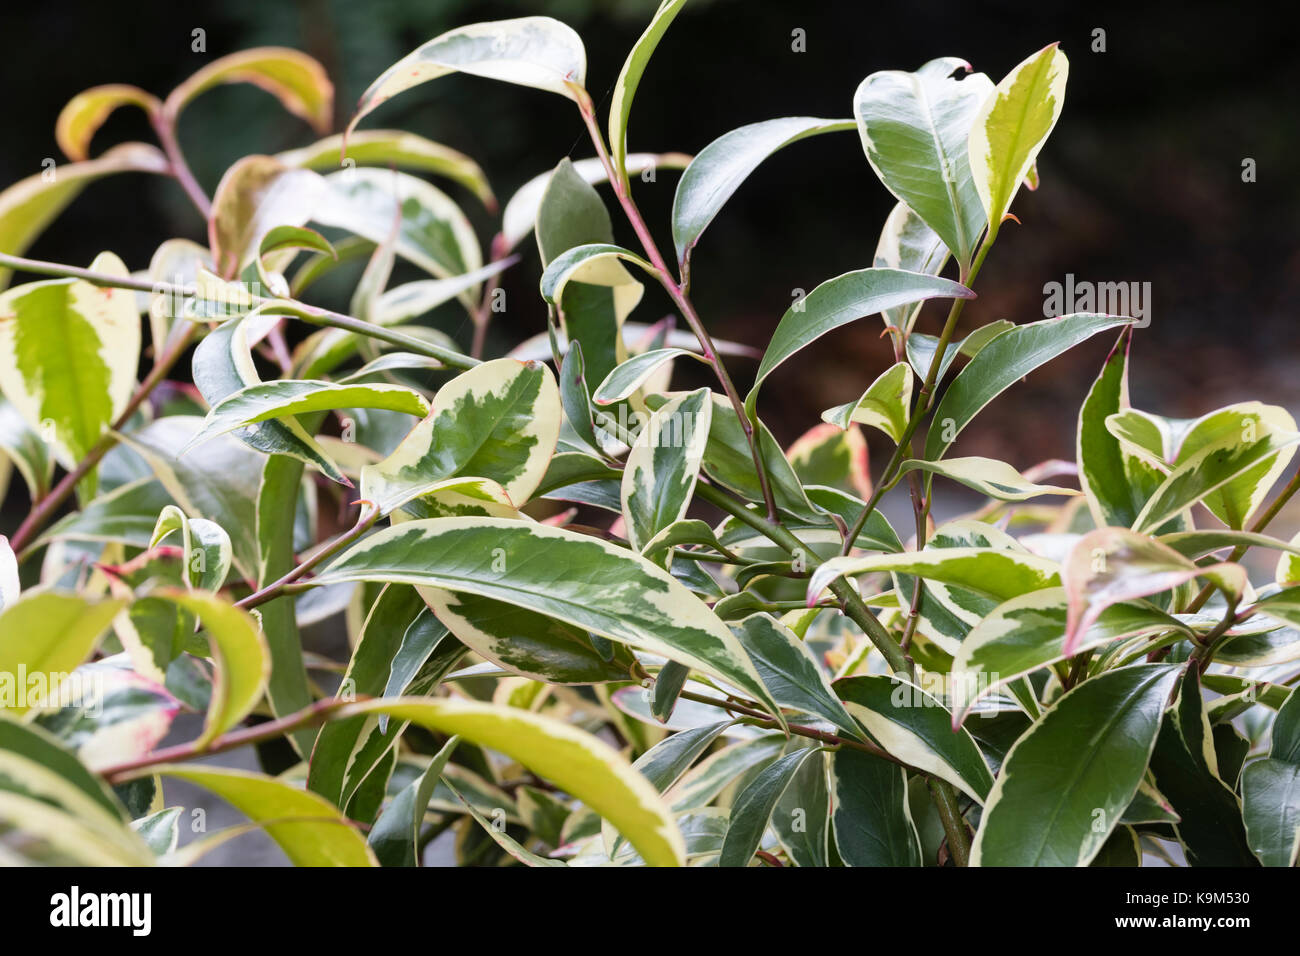 White margined variegation on the narrow evergreen leaves of the Japanese shrub, Cleyera fortunei 'Variegata' Stock Photo